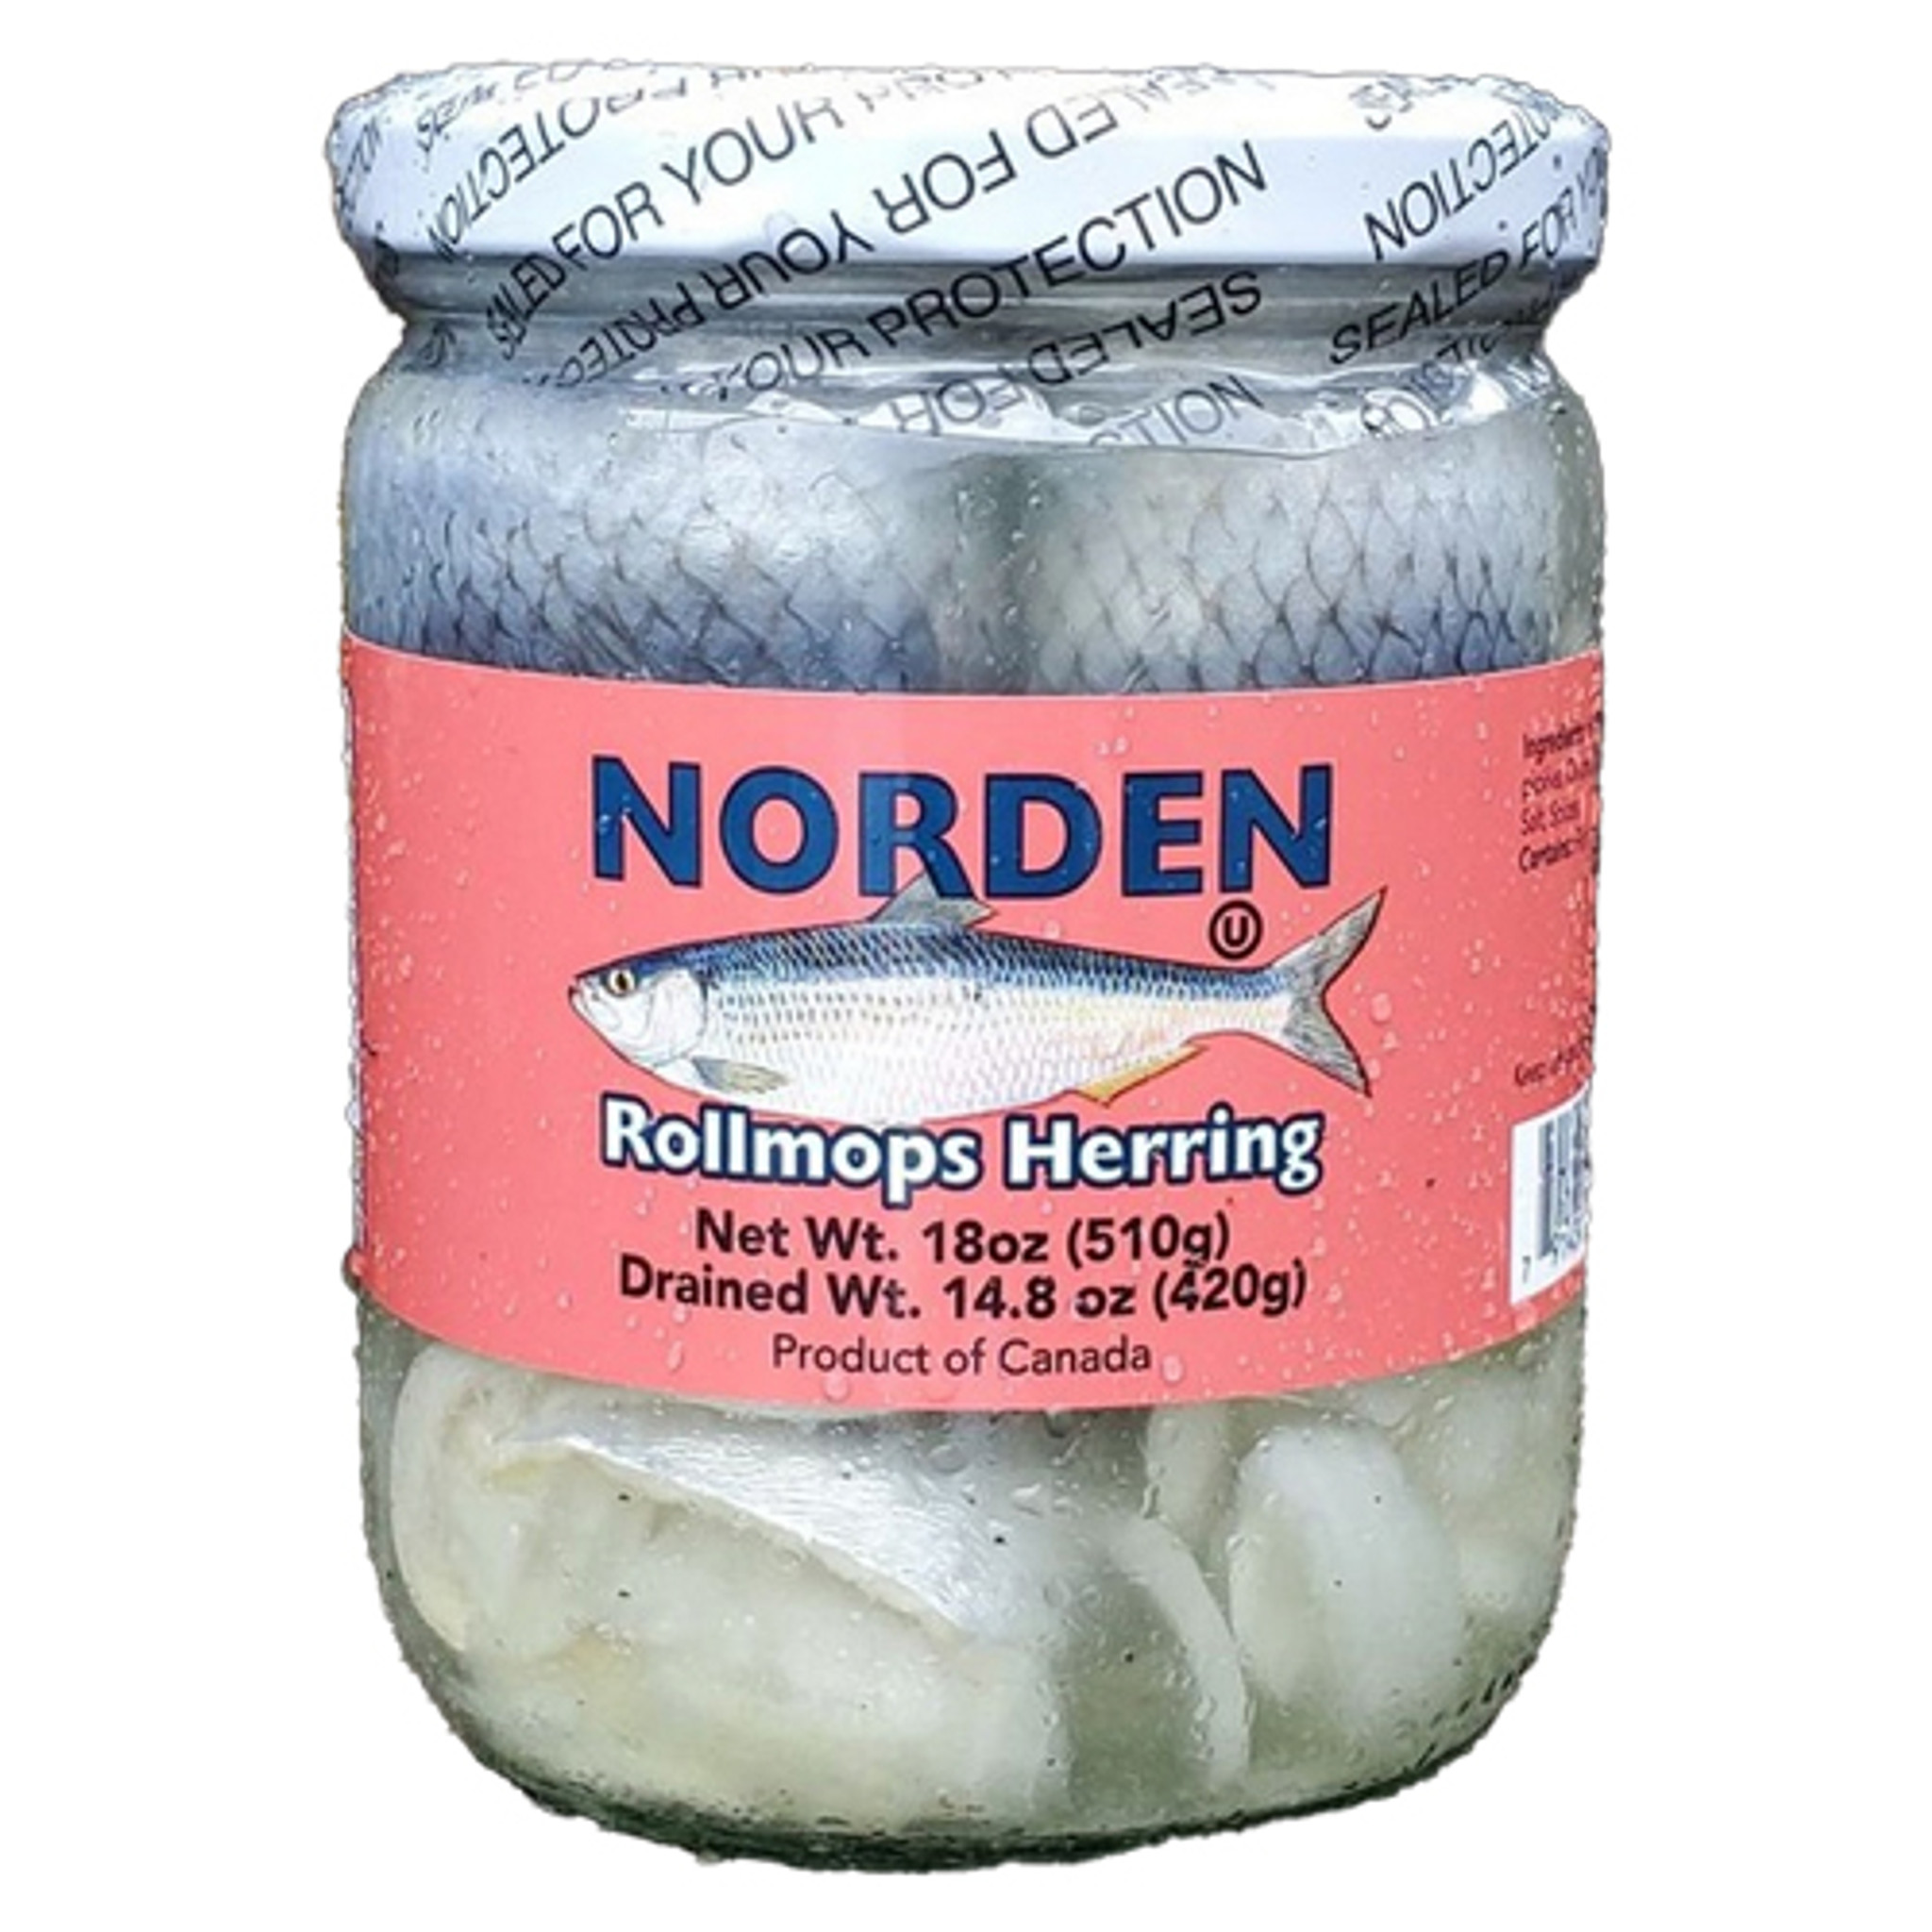 Norden Rollmops Herring in Glass Jar, 18 oz. - The Taste of Germany